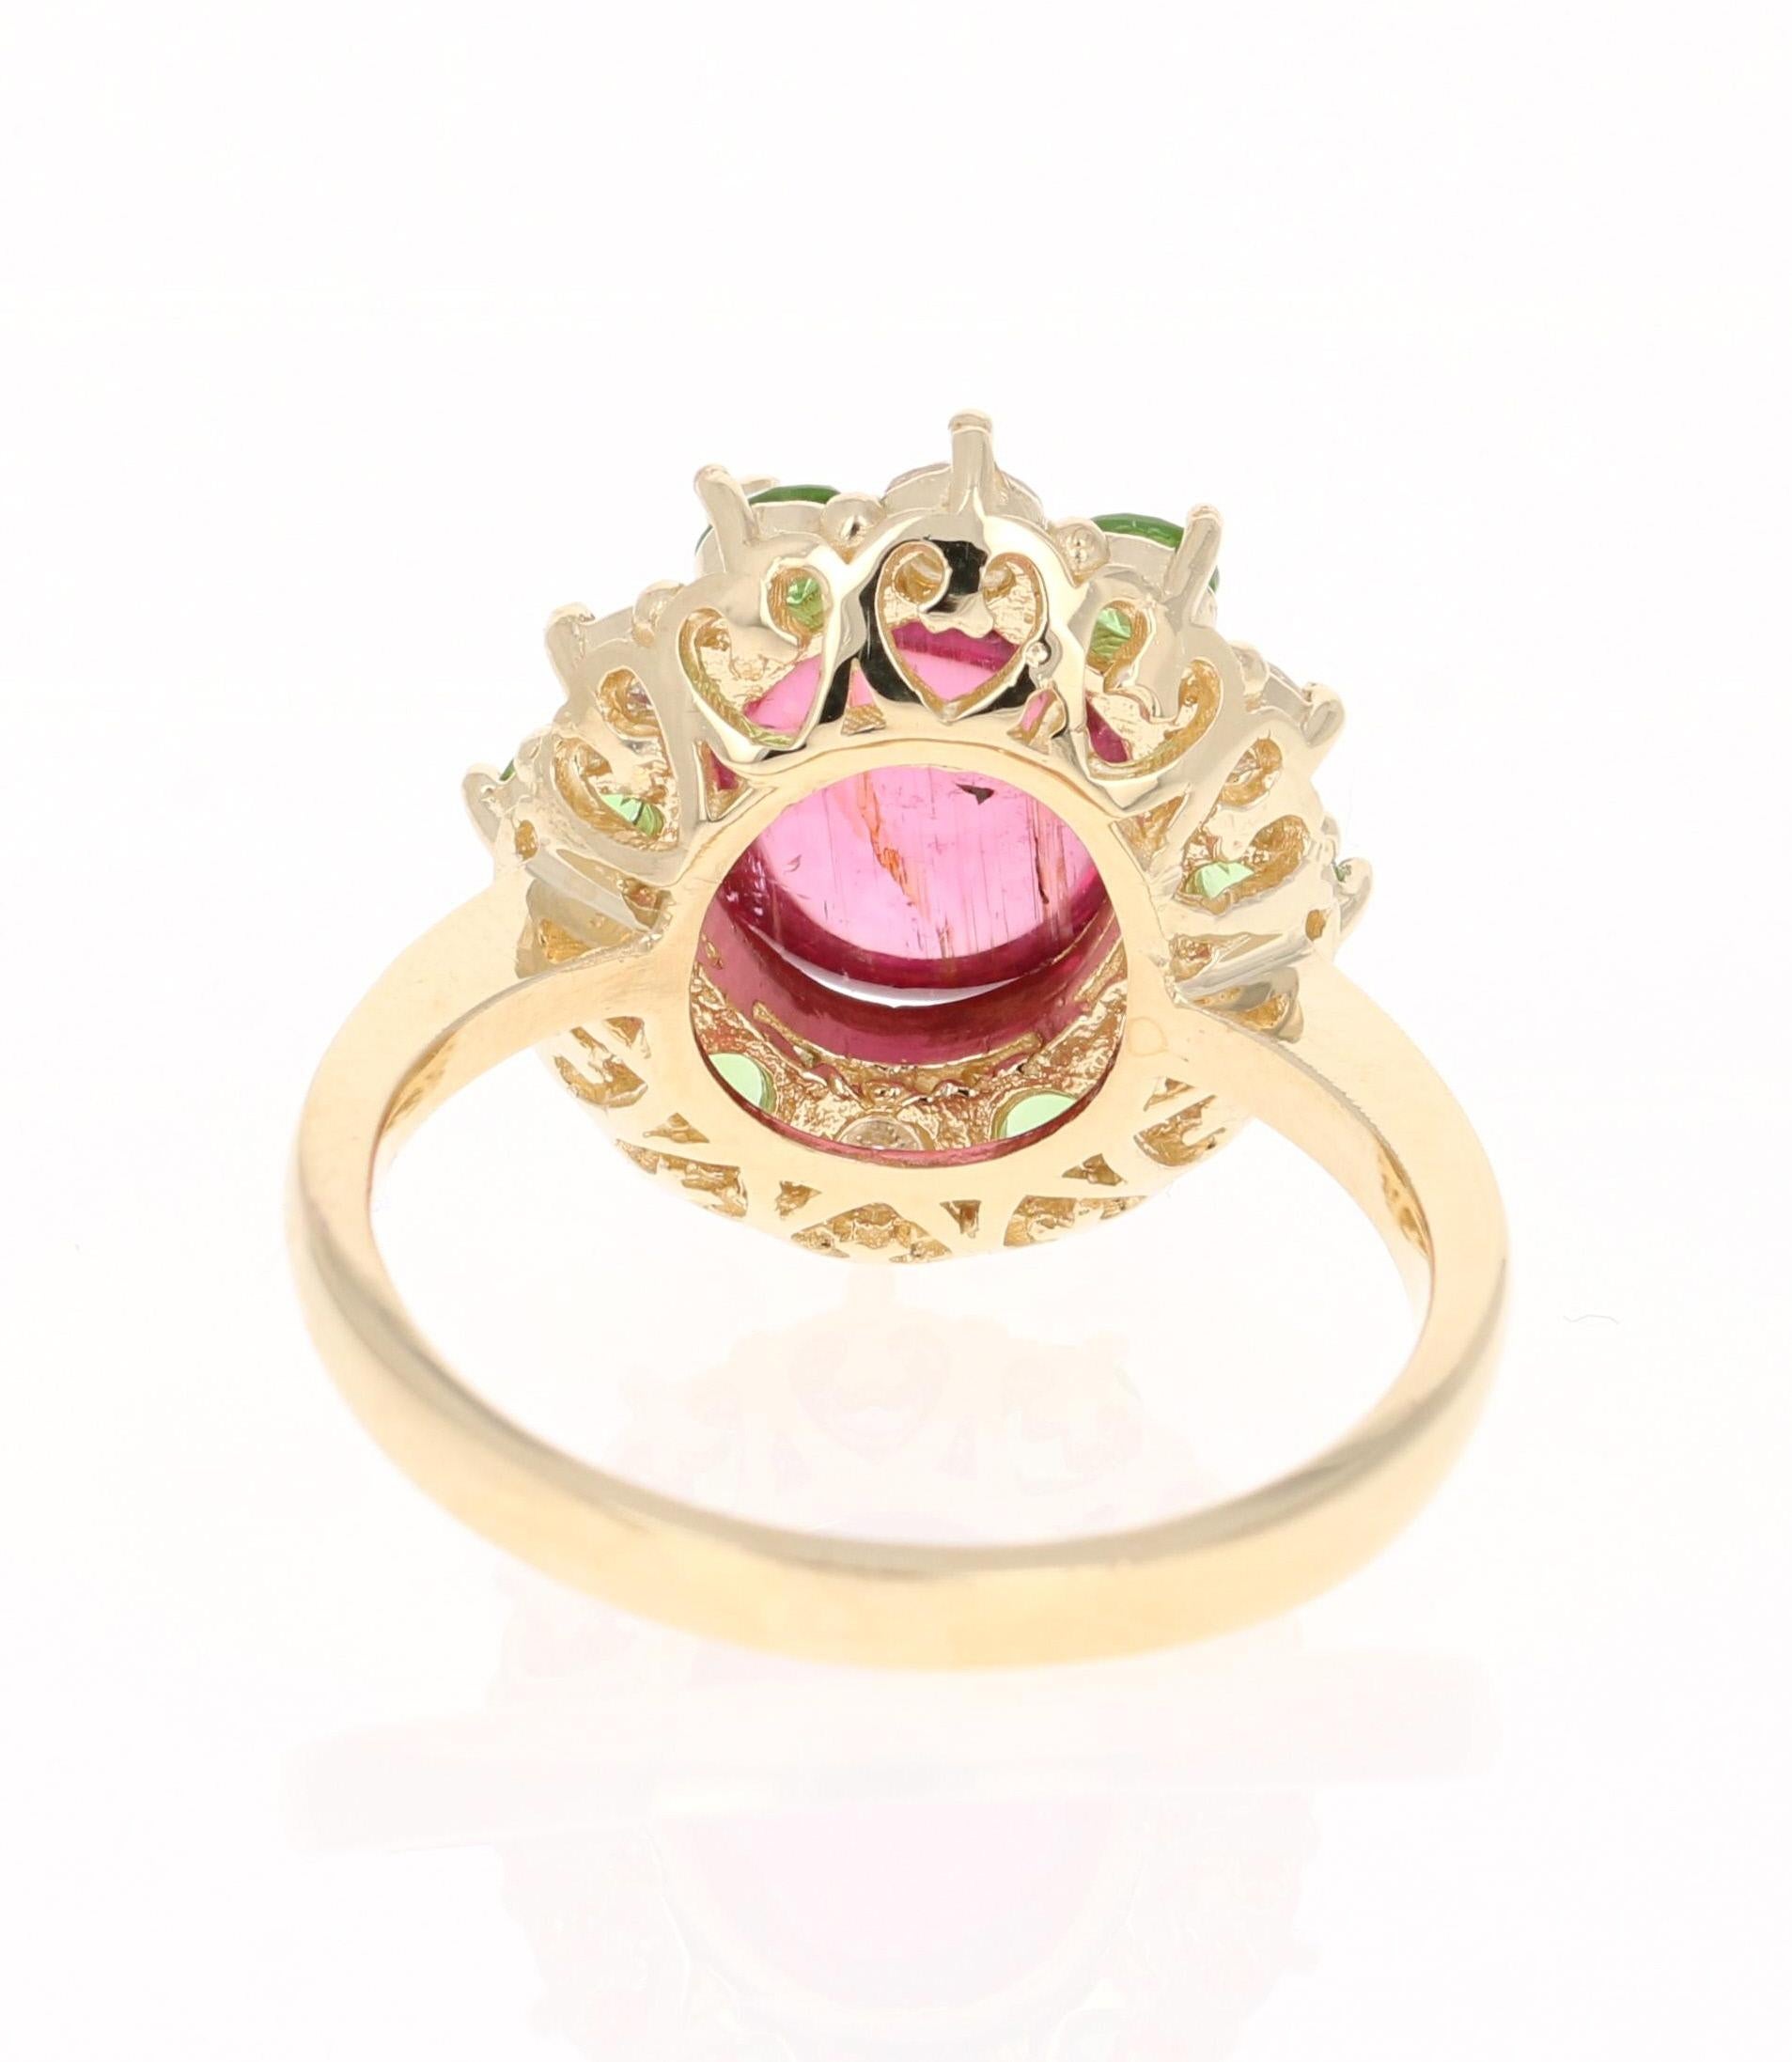 Oval Cut 4.78 Carat Pink Tourmaline Tsavorite Diamond 14 Karat Yellow Gold Ring